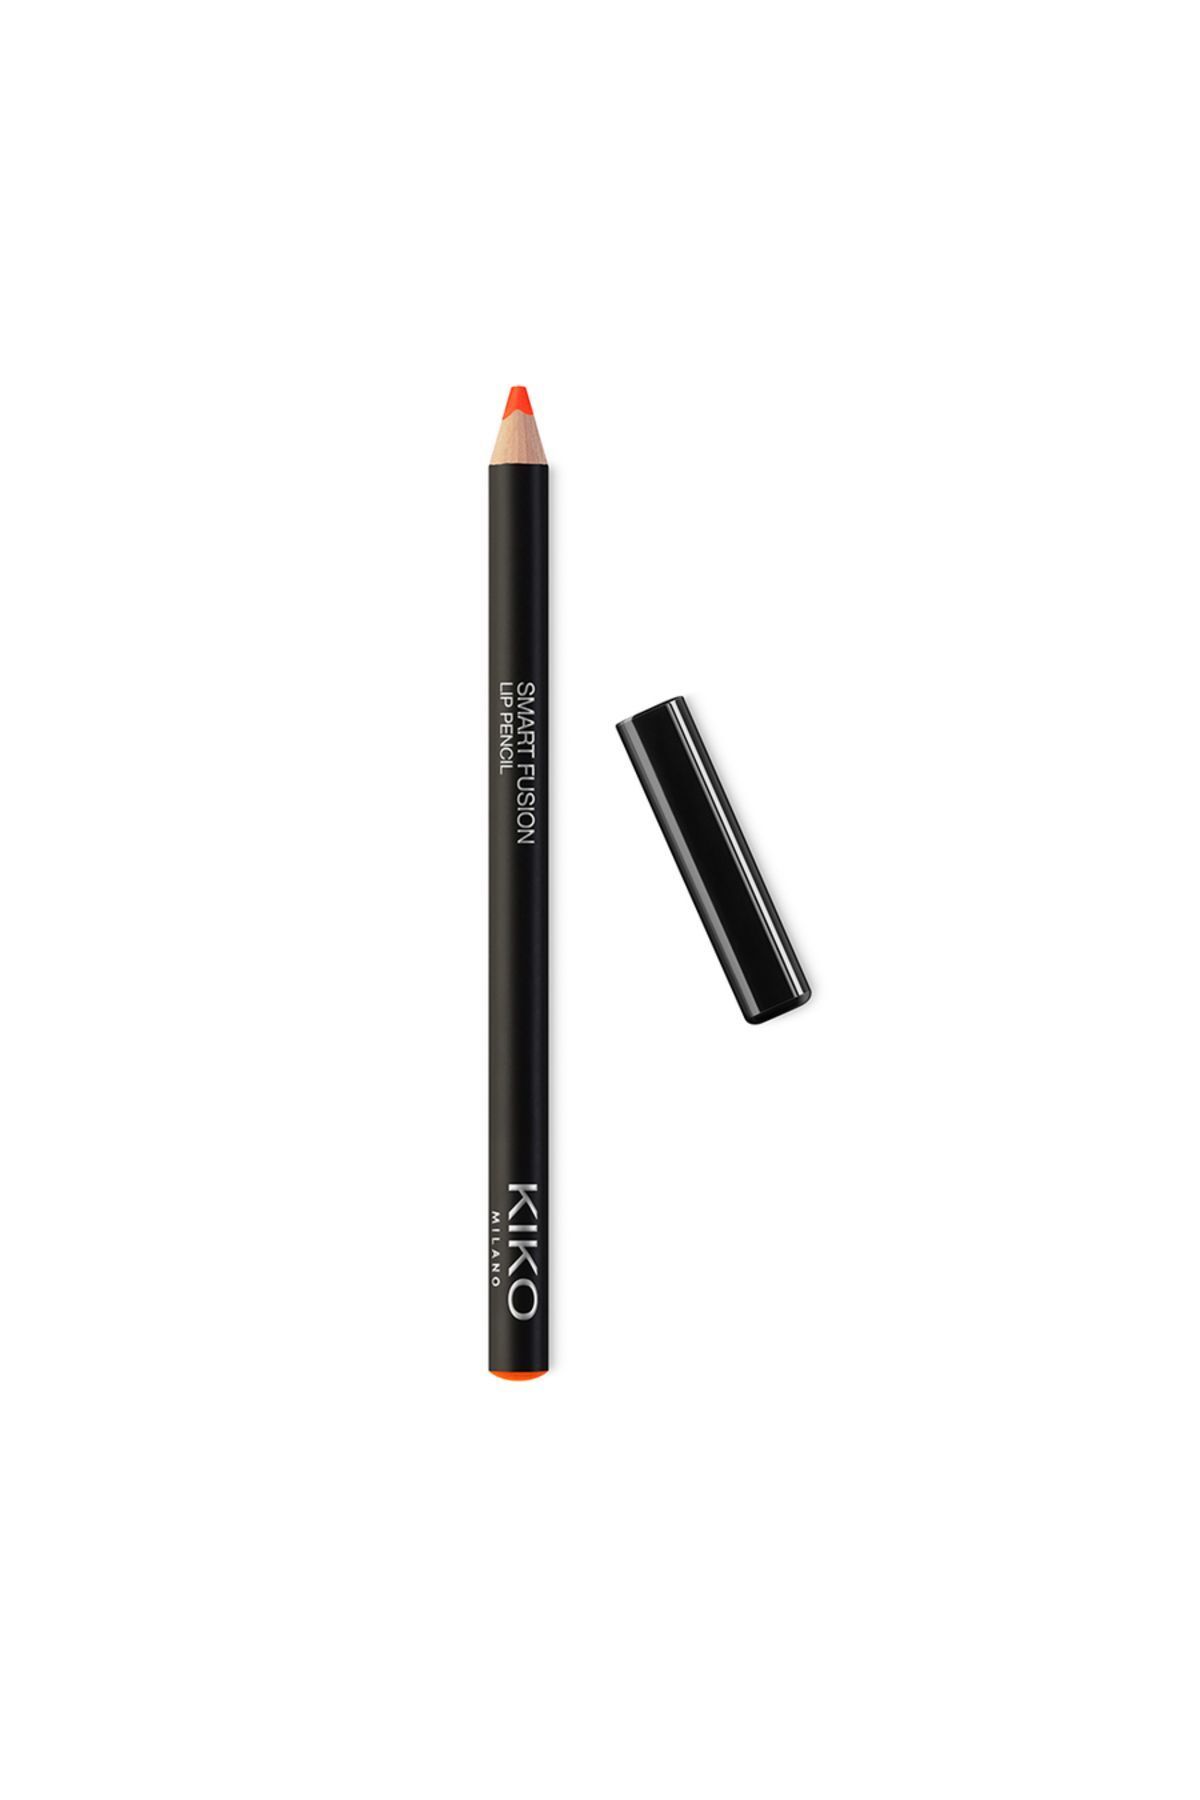 KIKO DUDAK KALEMİ - Smart Fusion Lip Pencil - 513 Red Papaya